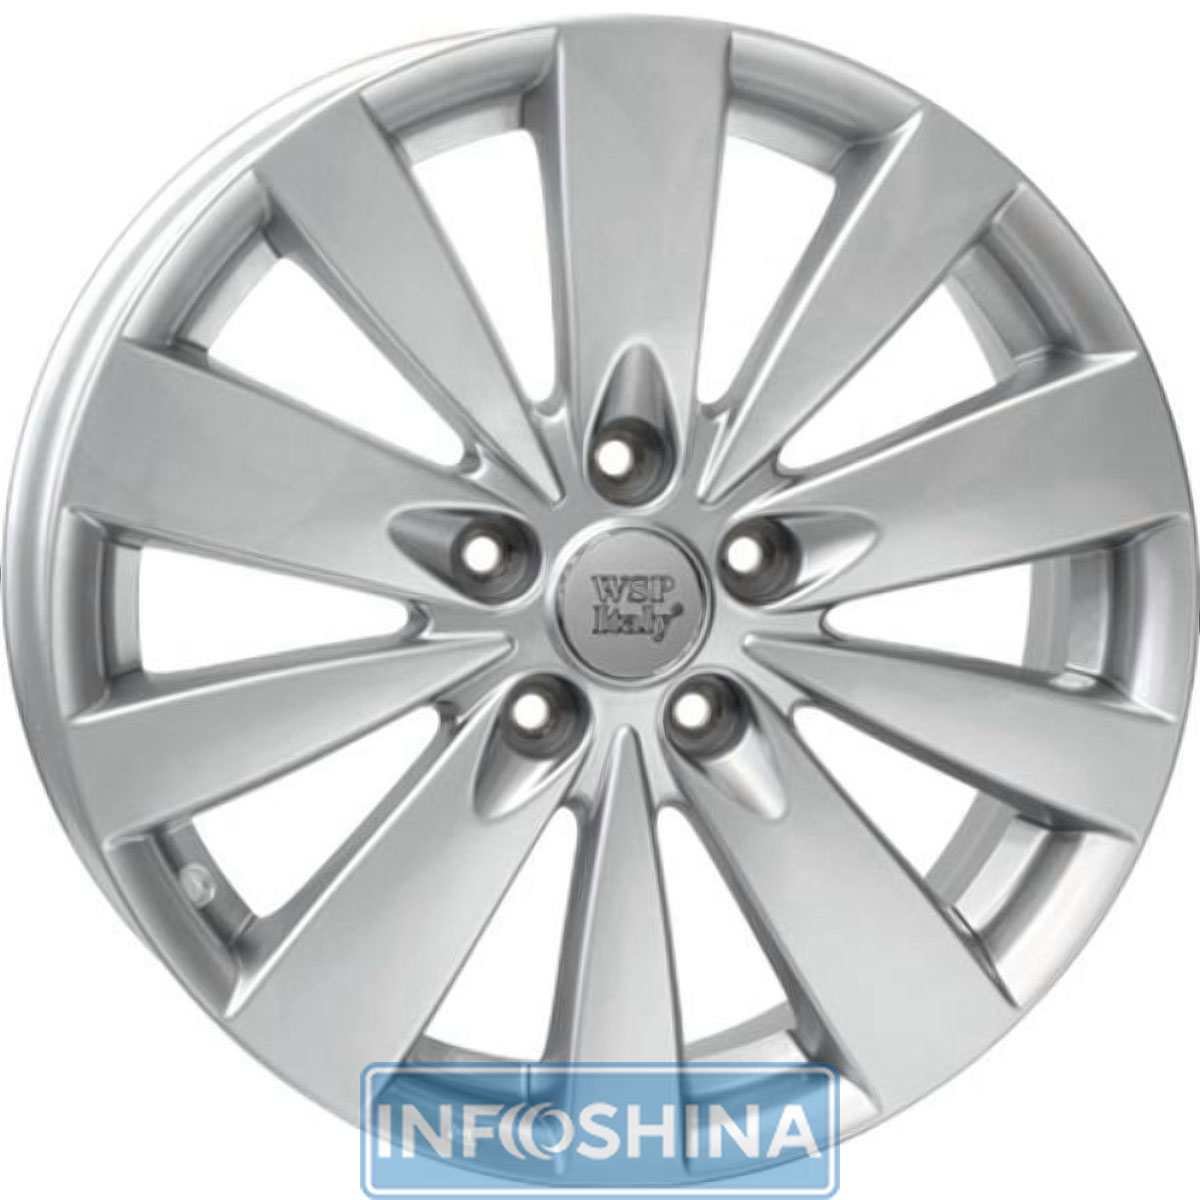 Купить диски WSP Italy Hyundai W3904 S Ravenna R17 W6.5 PCD5x114.3 ET46 DIA67.1